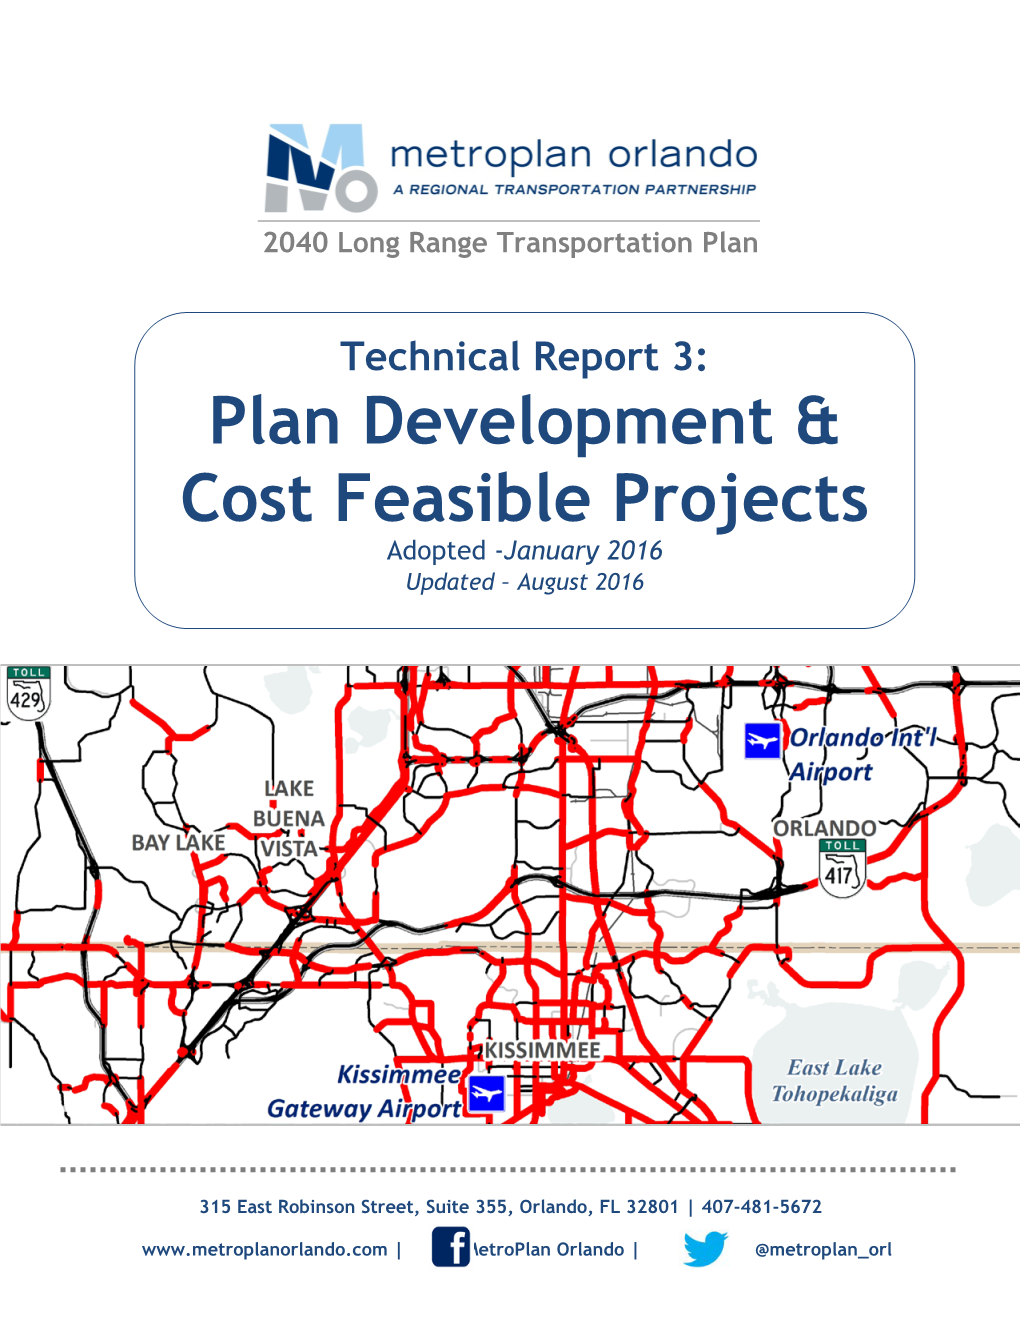 Plan Development & Cost Feasible Projects